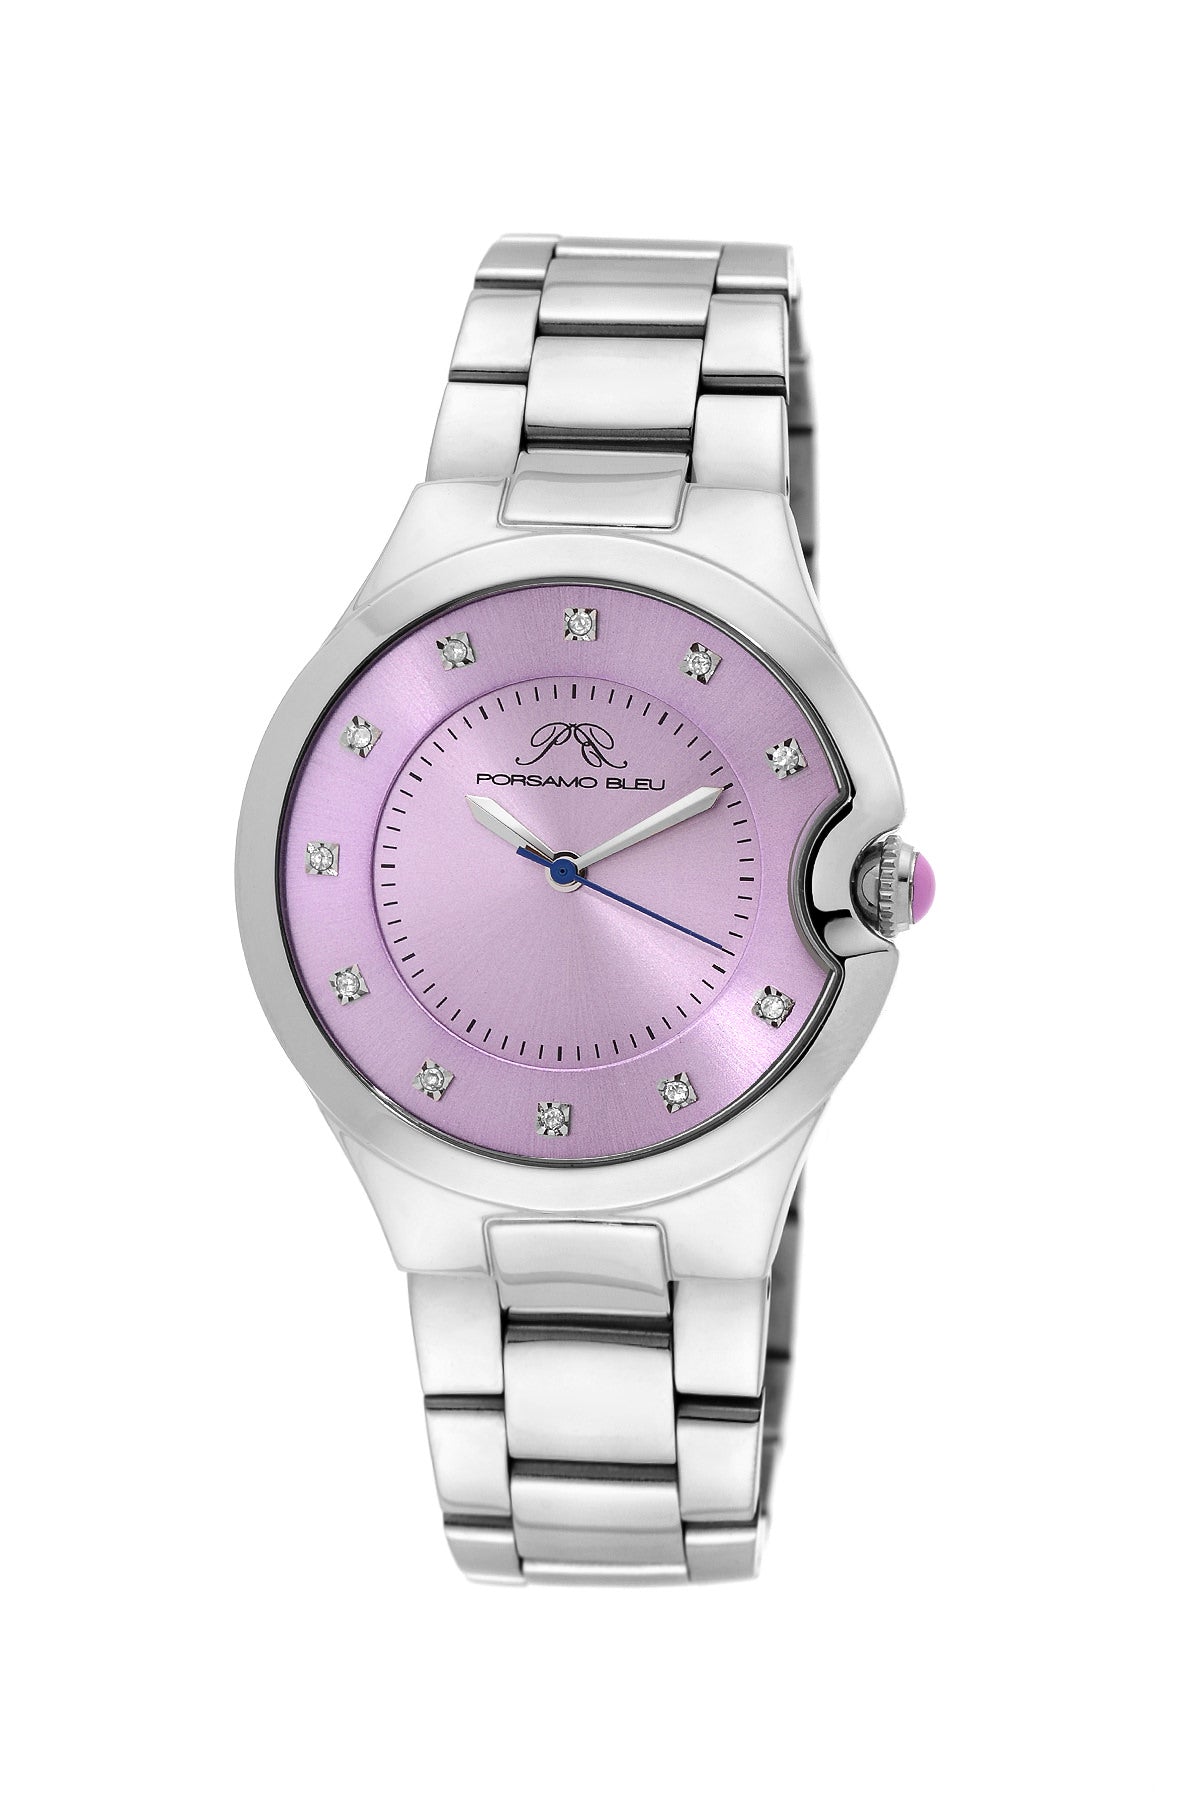 Porsamo Bleu Emilia luxury diamond women's stainless steel watch, silver, lilac 822BEMS